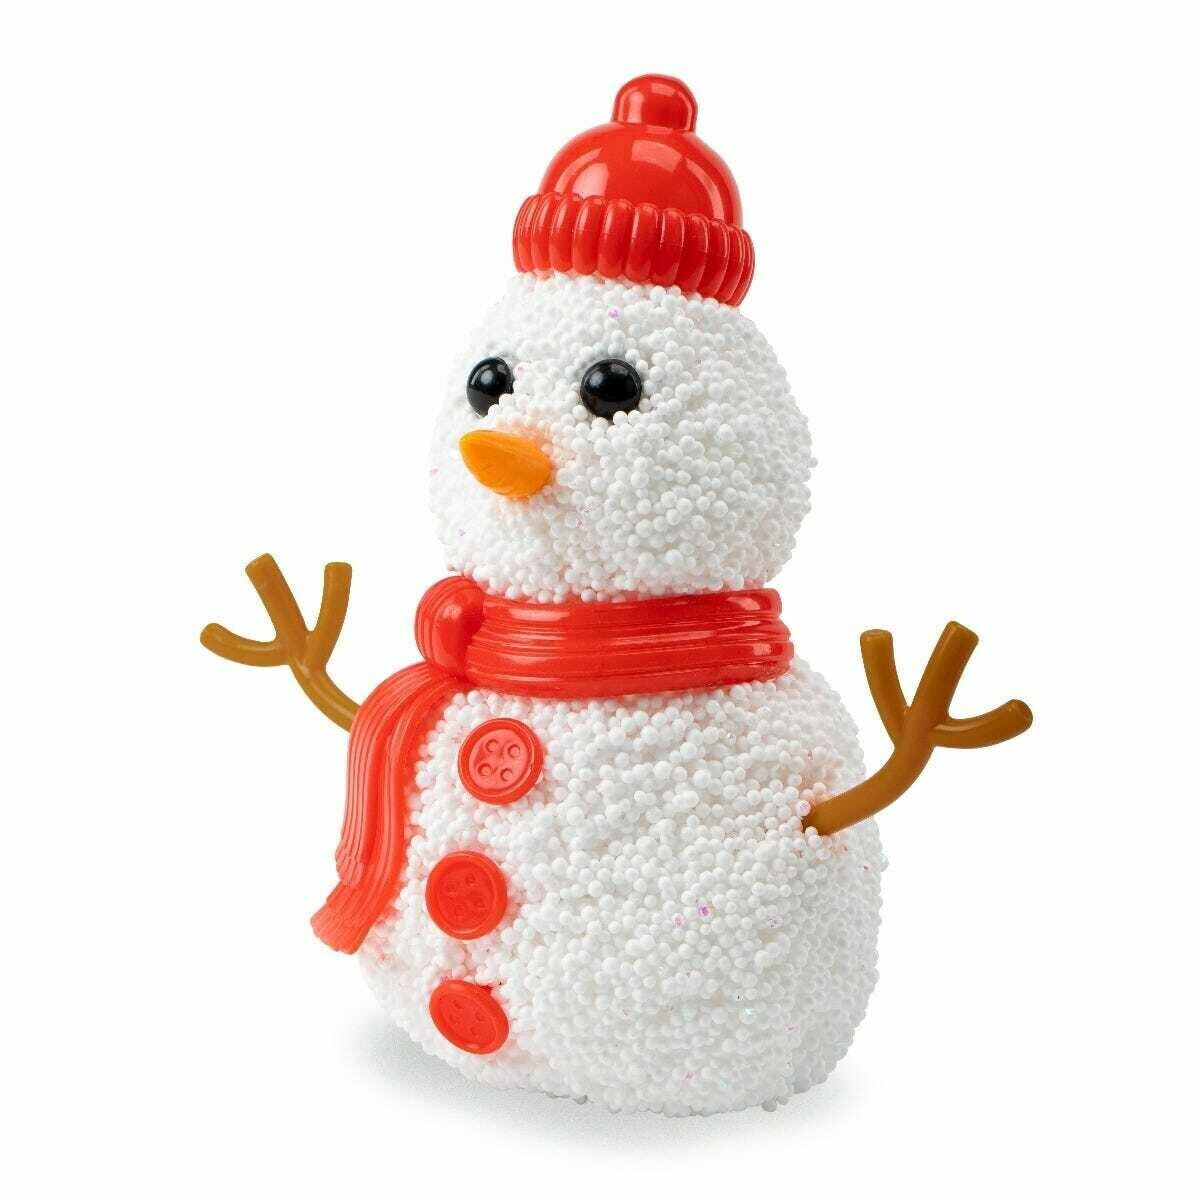 Playfoam Build A Snowman - Hombre de Nieve de Playfoam